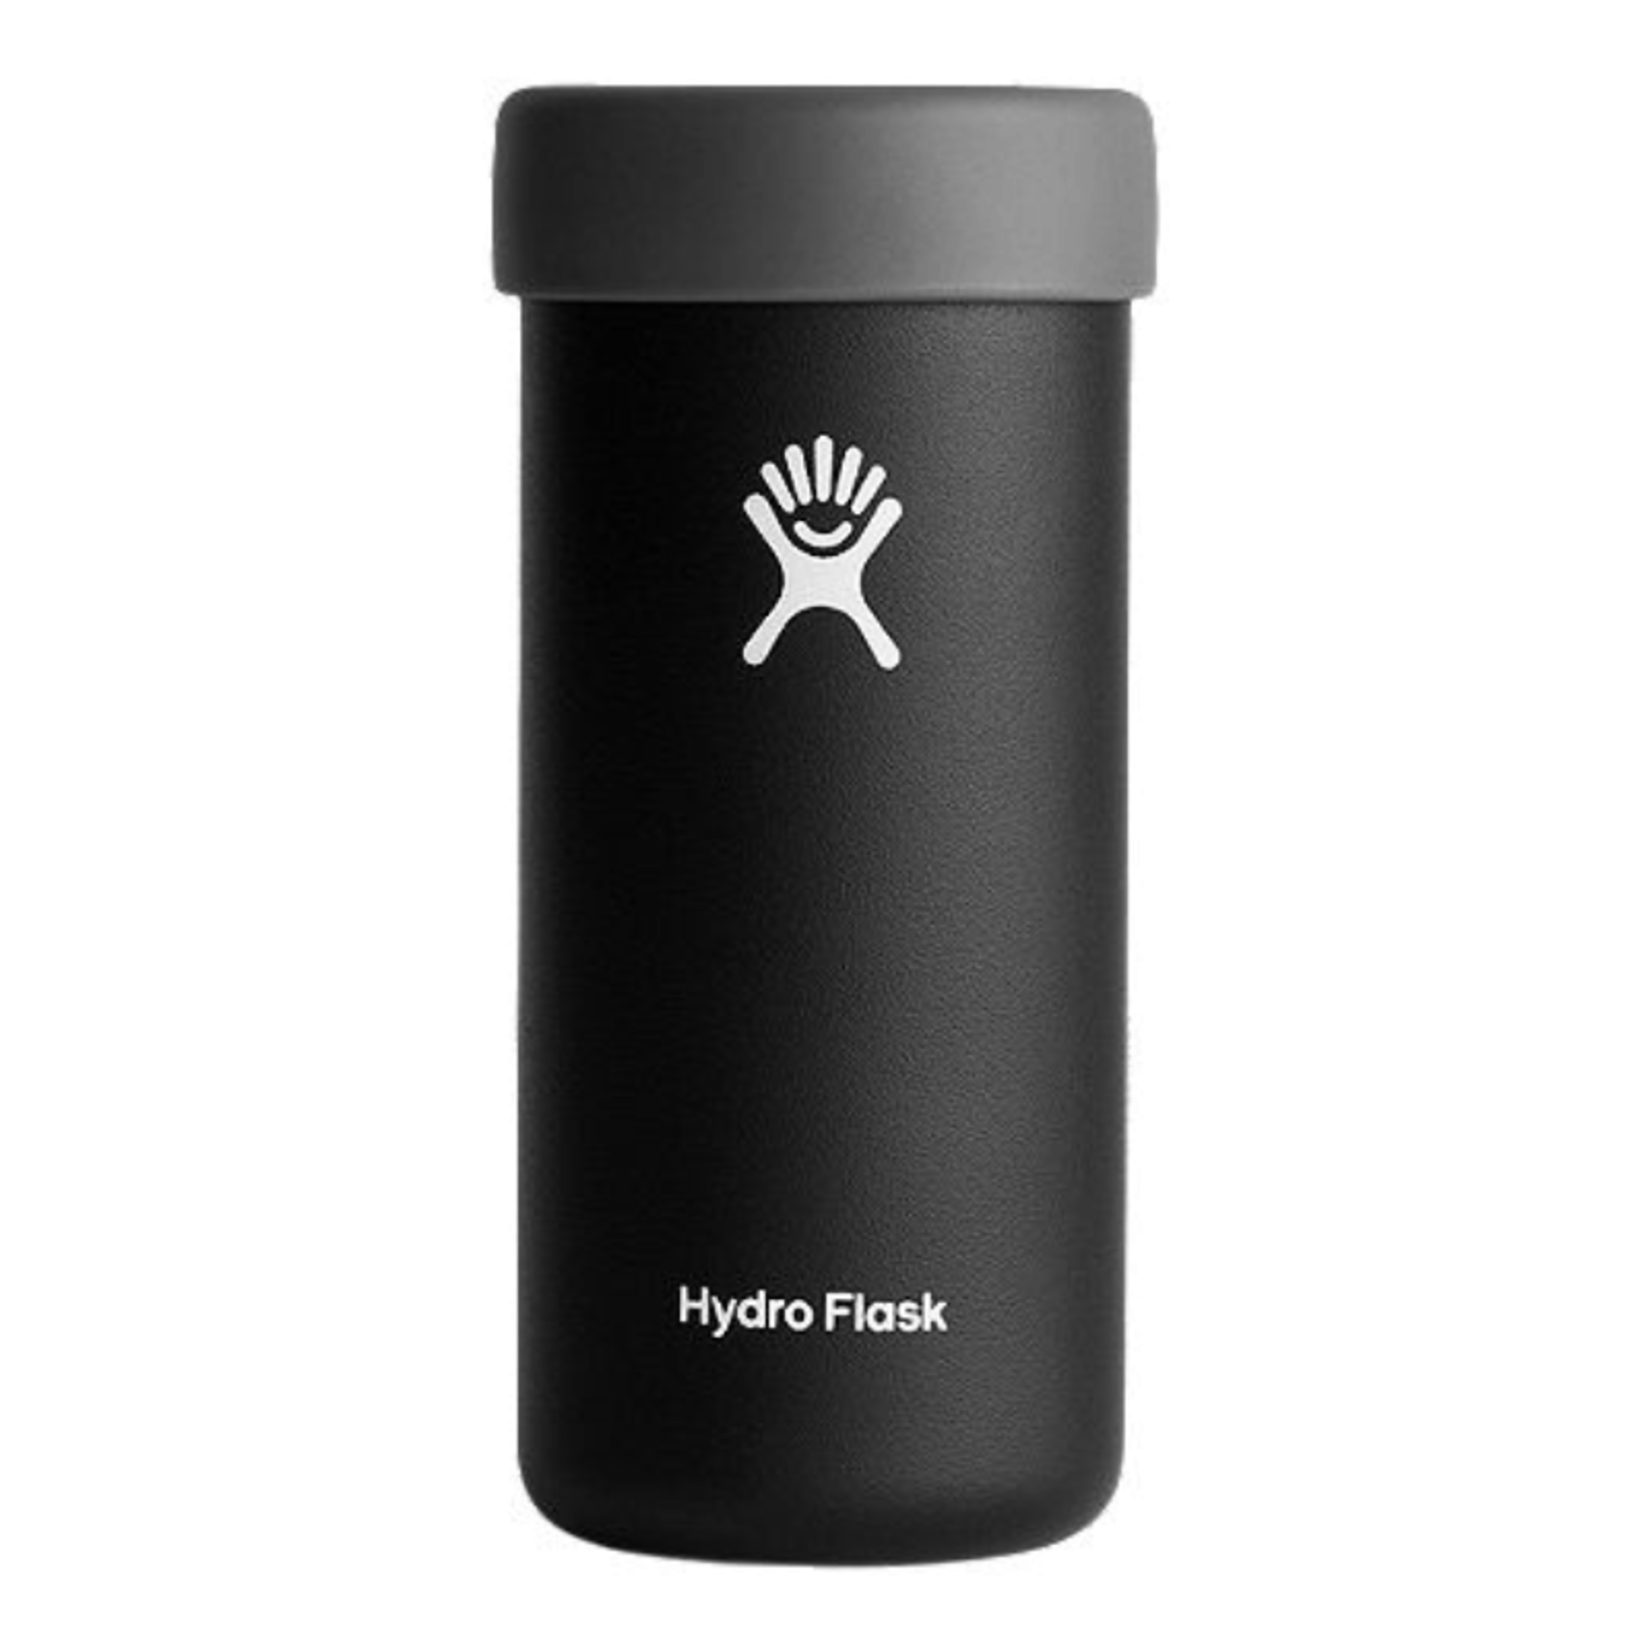 Hydro Flask Hydro Flask 12oz  Slim Cooler Cup Black